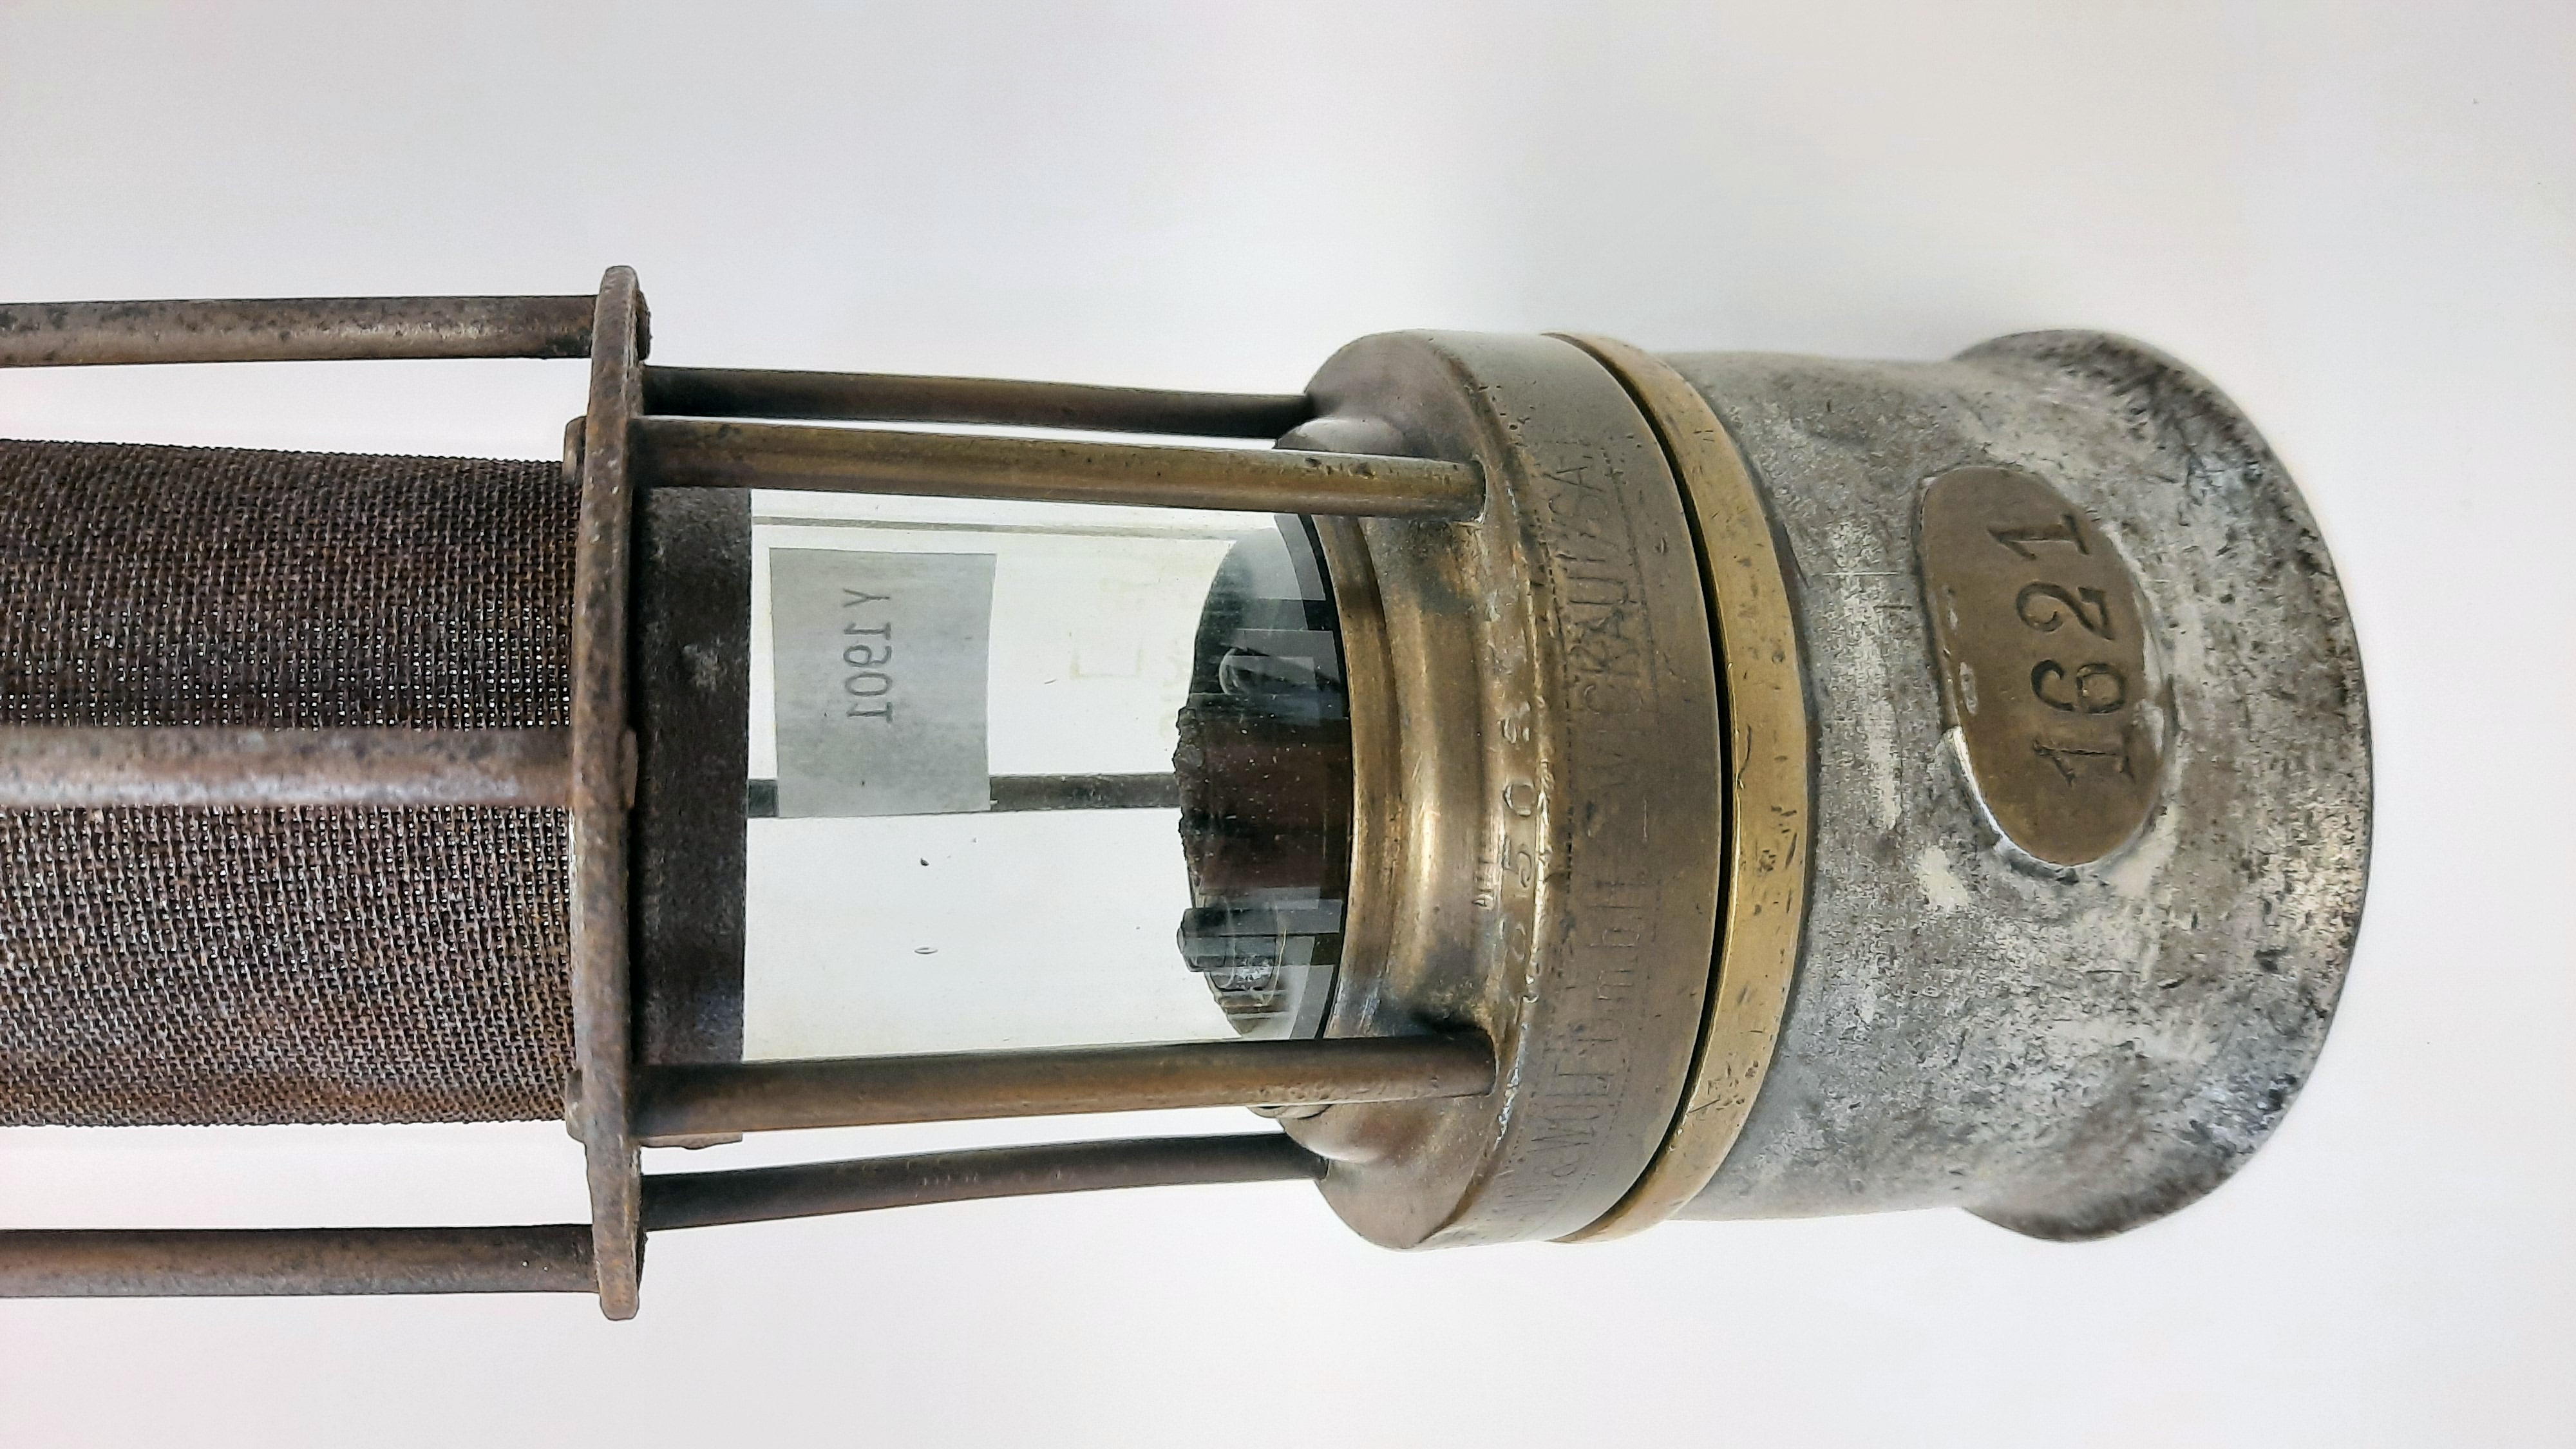 Grubenlampe bergbaulampen Reibstreifenzünder model 1910 bergbau